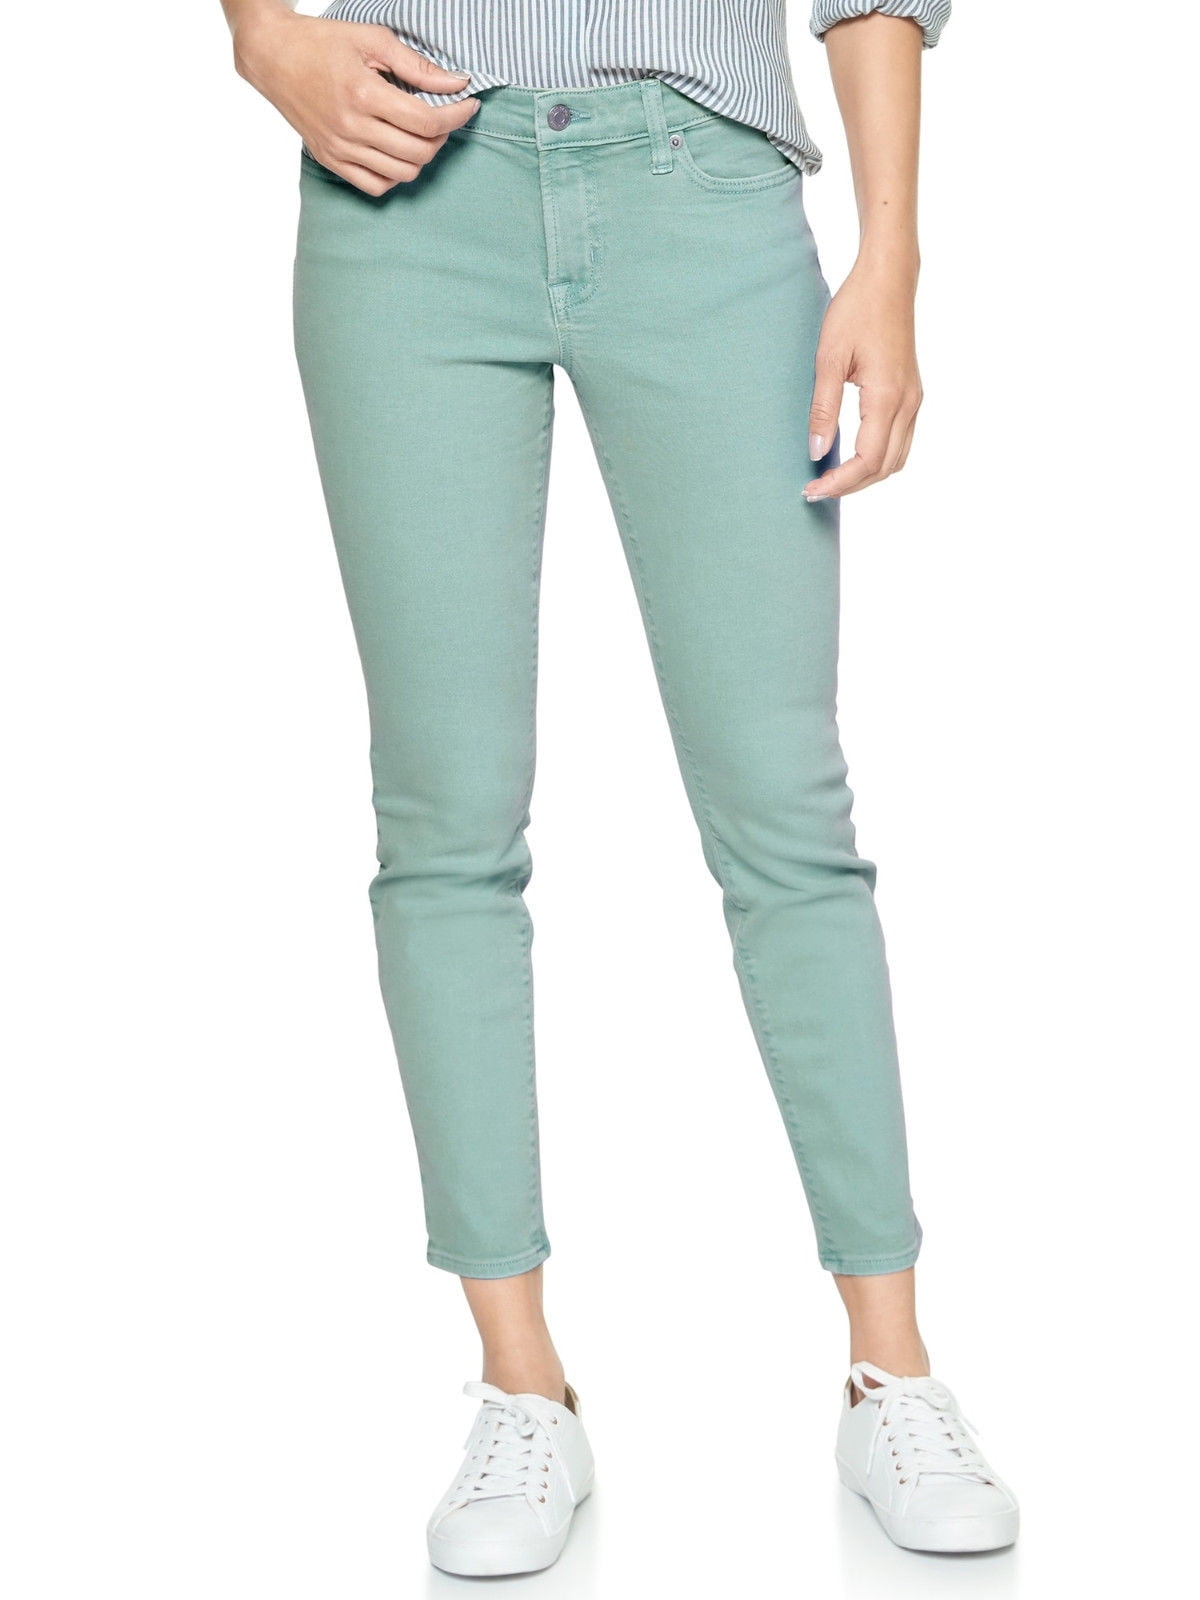 Women's Jeans Jeggings Five Pocket Stretch Denim Pants (Red, Large